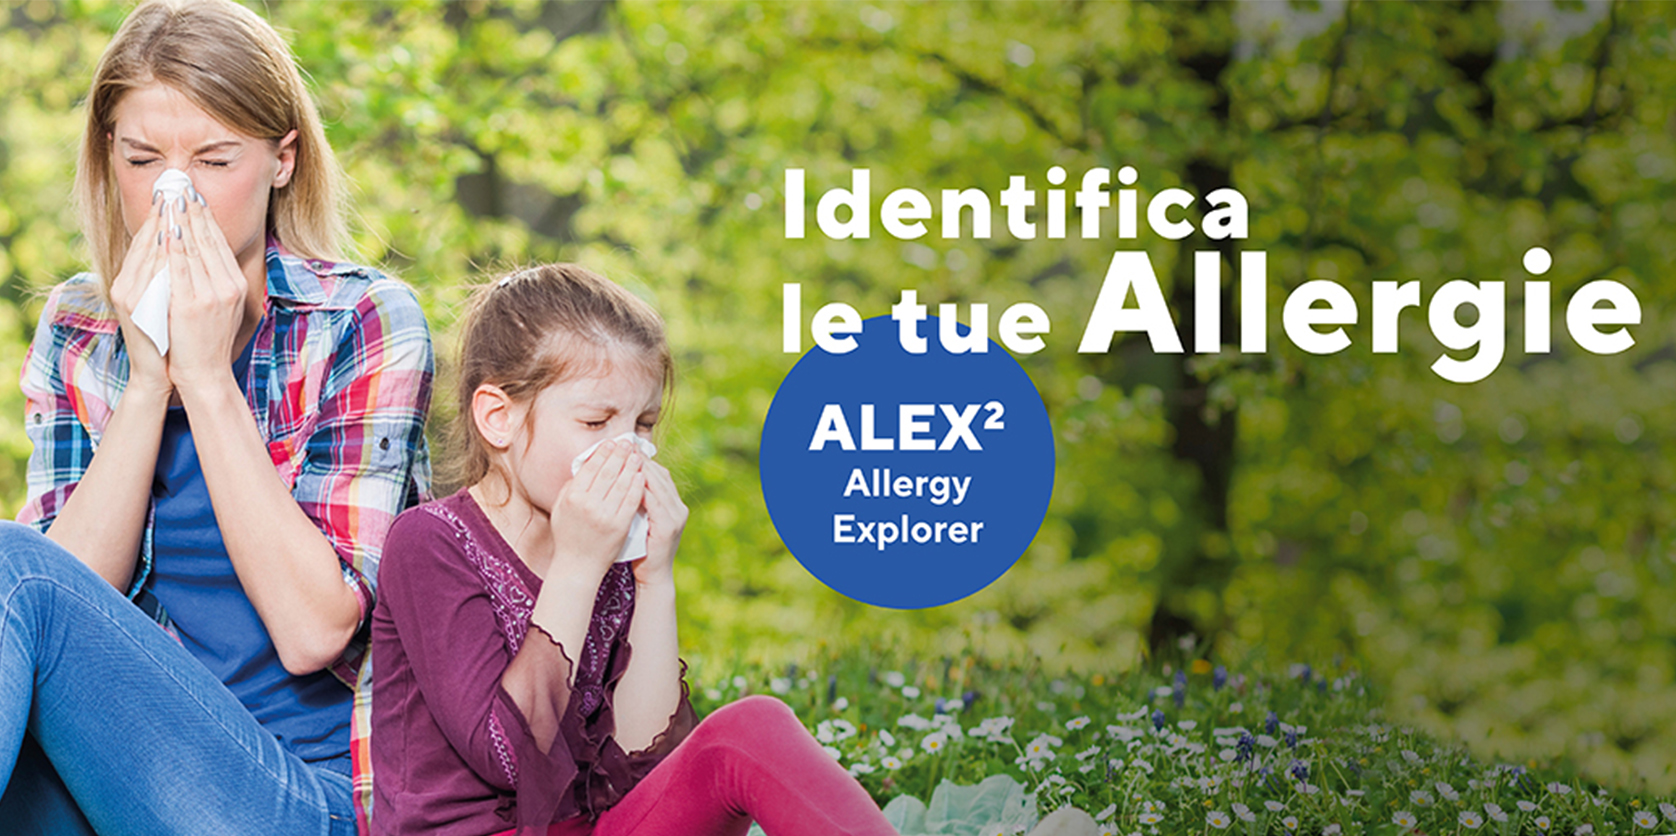 allergy-explorer-2-alex2-